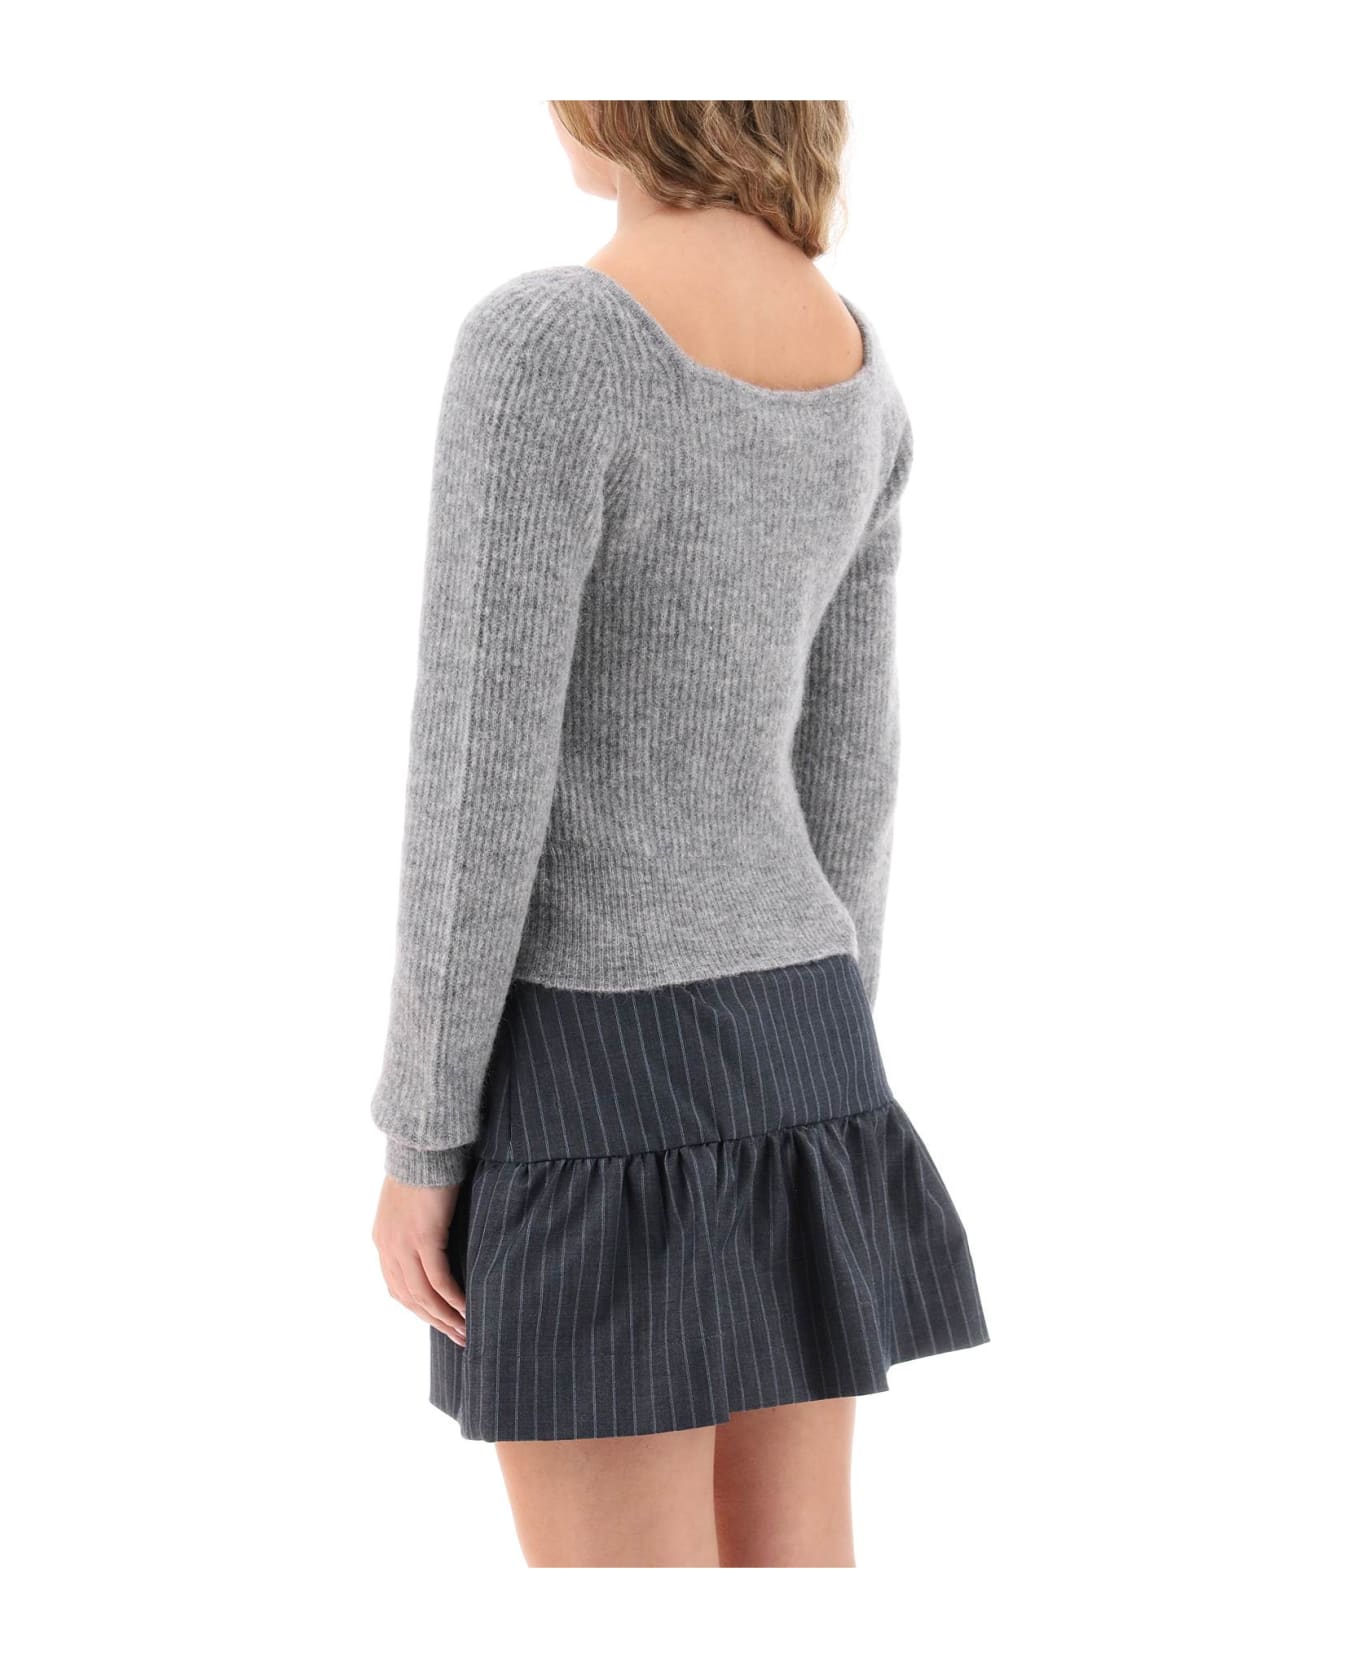 Ganni Sweater With Sweetheart Neckline - PALOMA MELANGE (Grey)